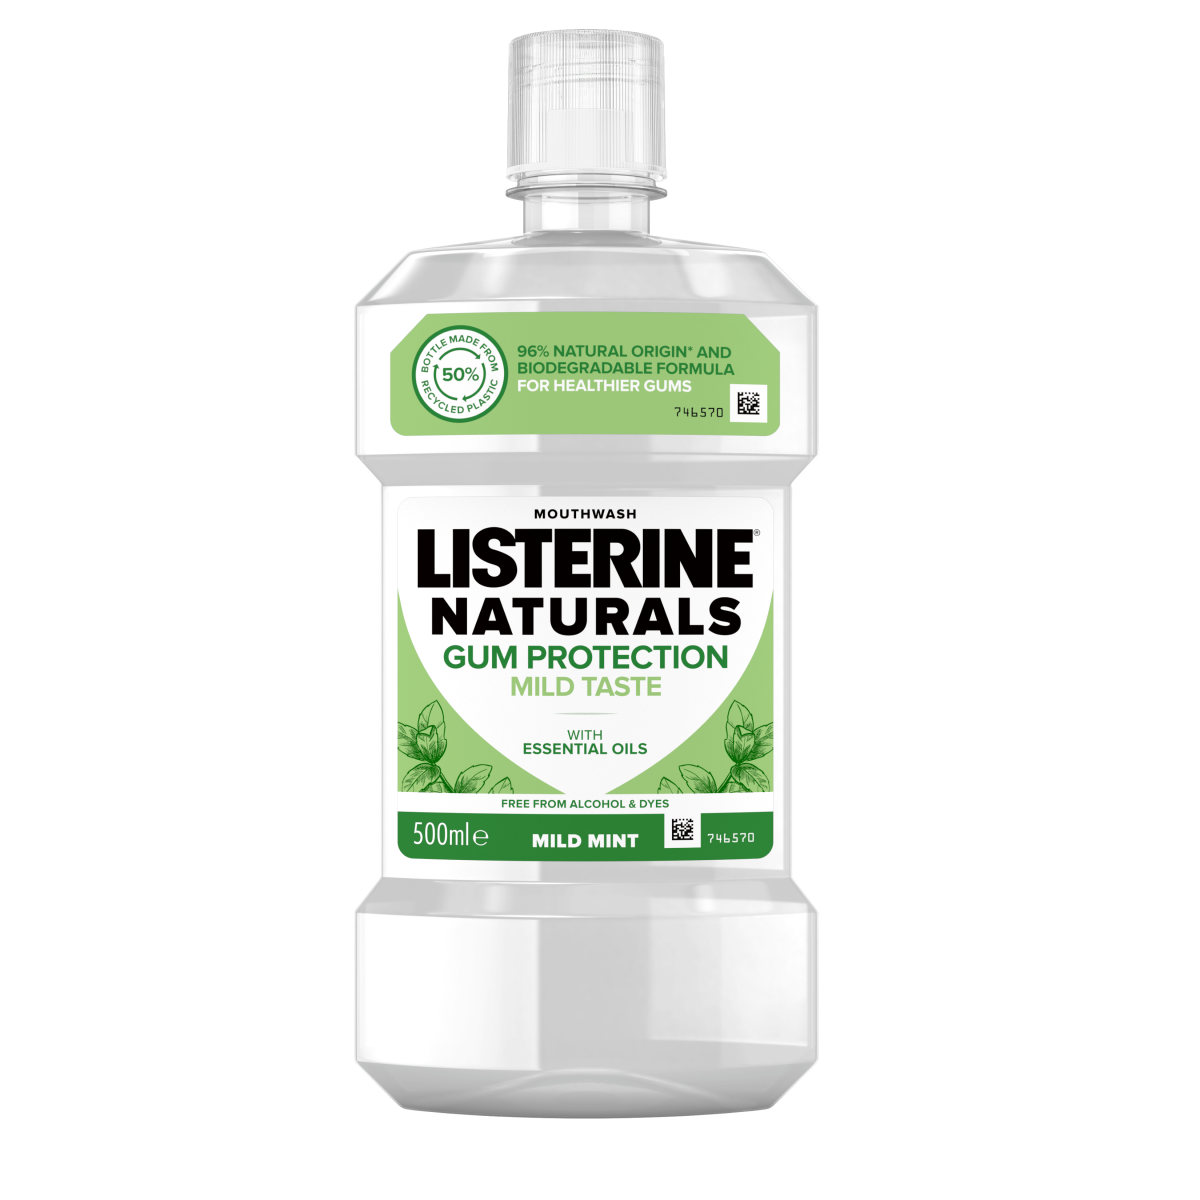 Listerine Naturals Gum Protection Mild Taste